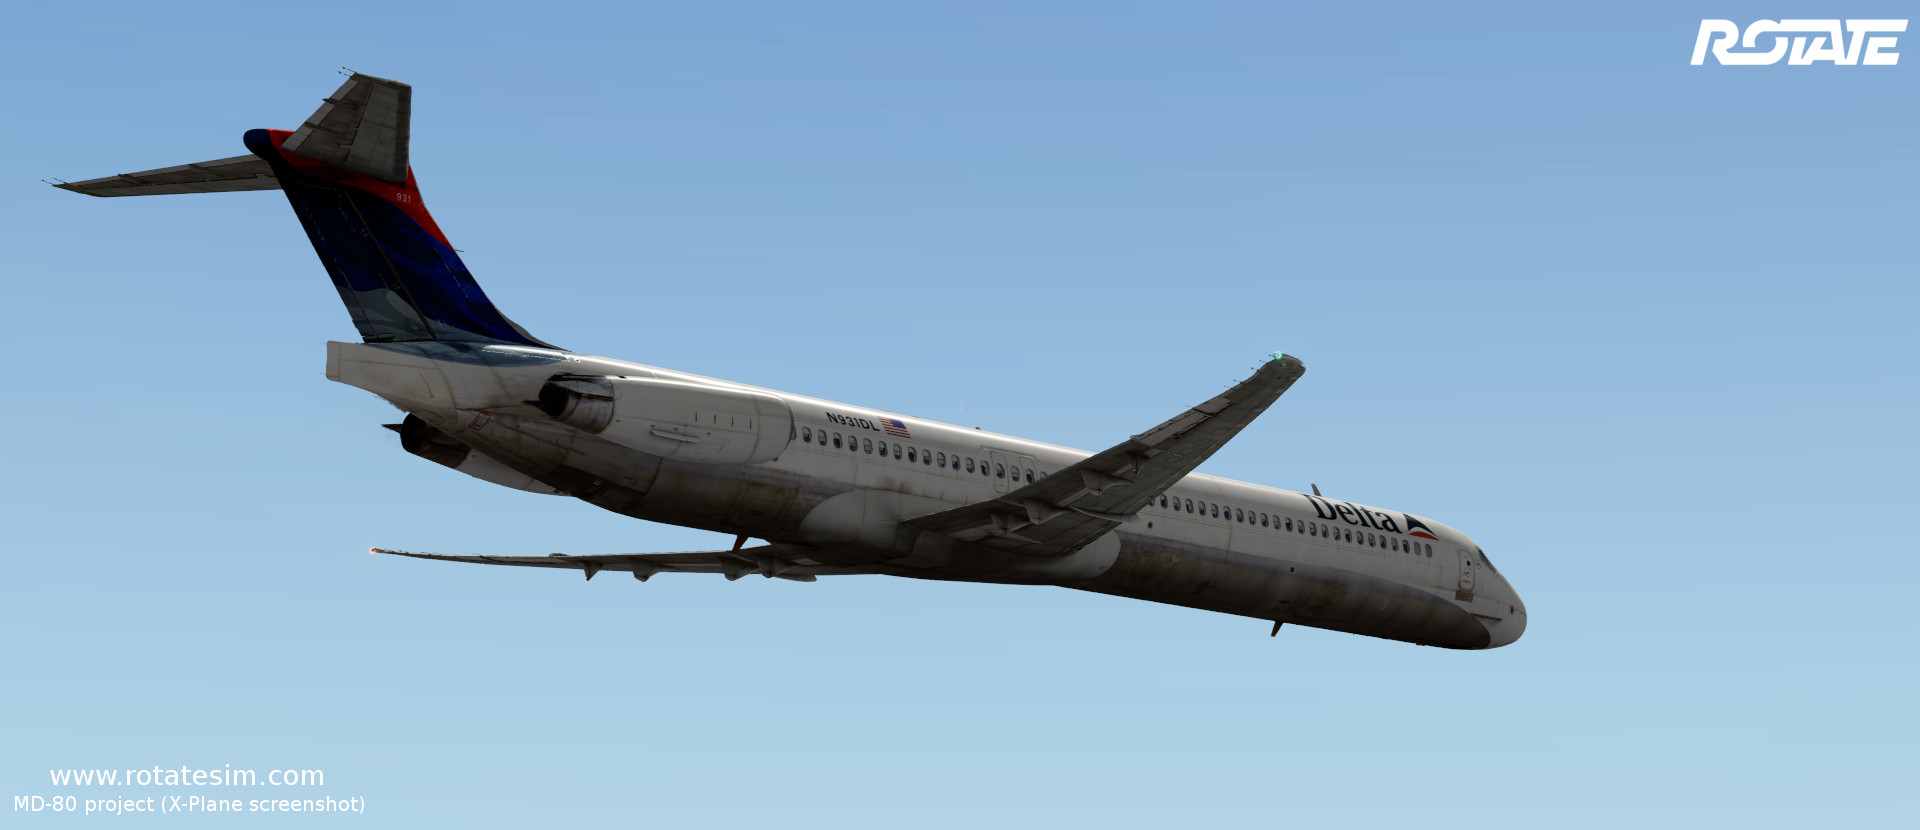 MD-80 liveries - Delta modern